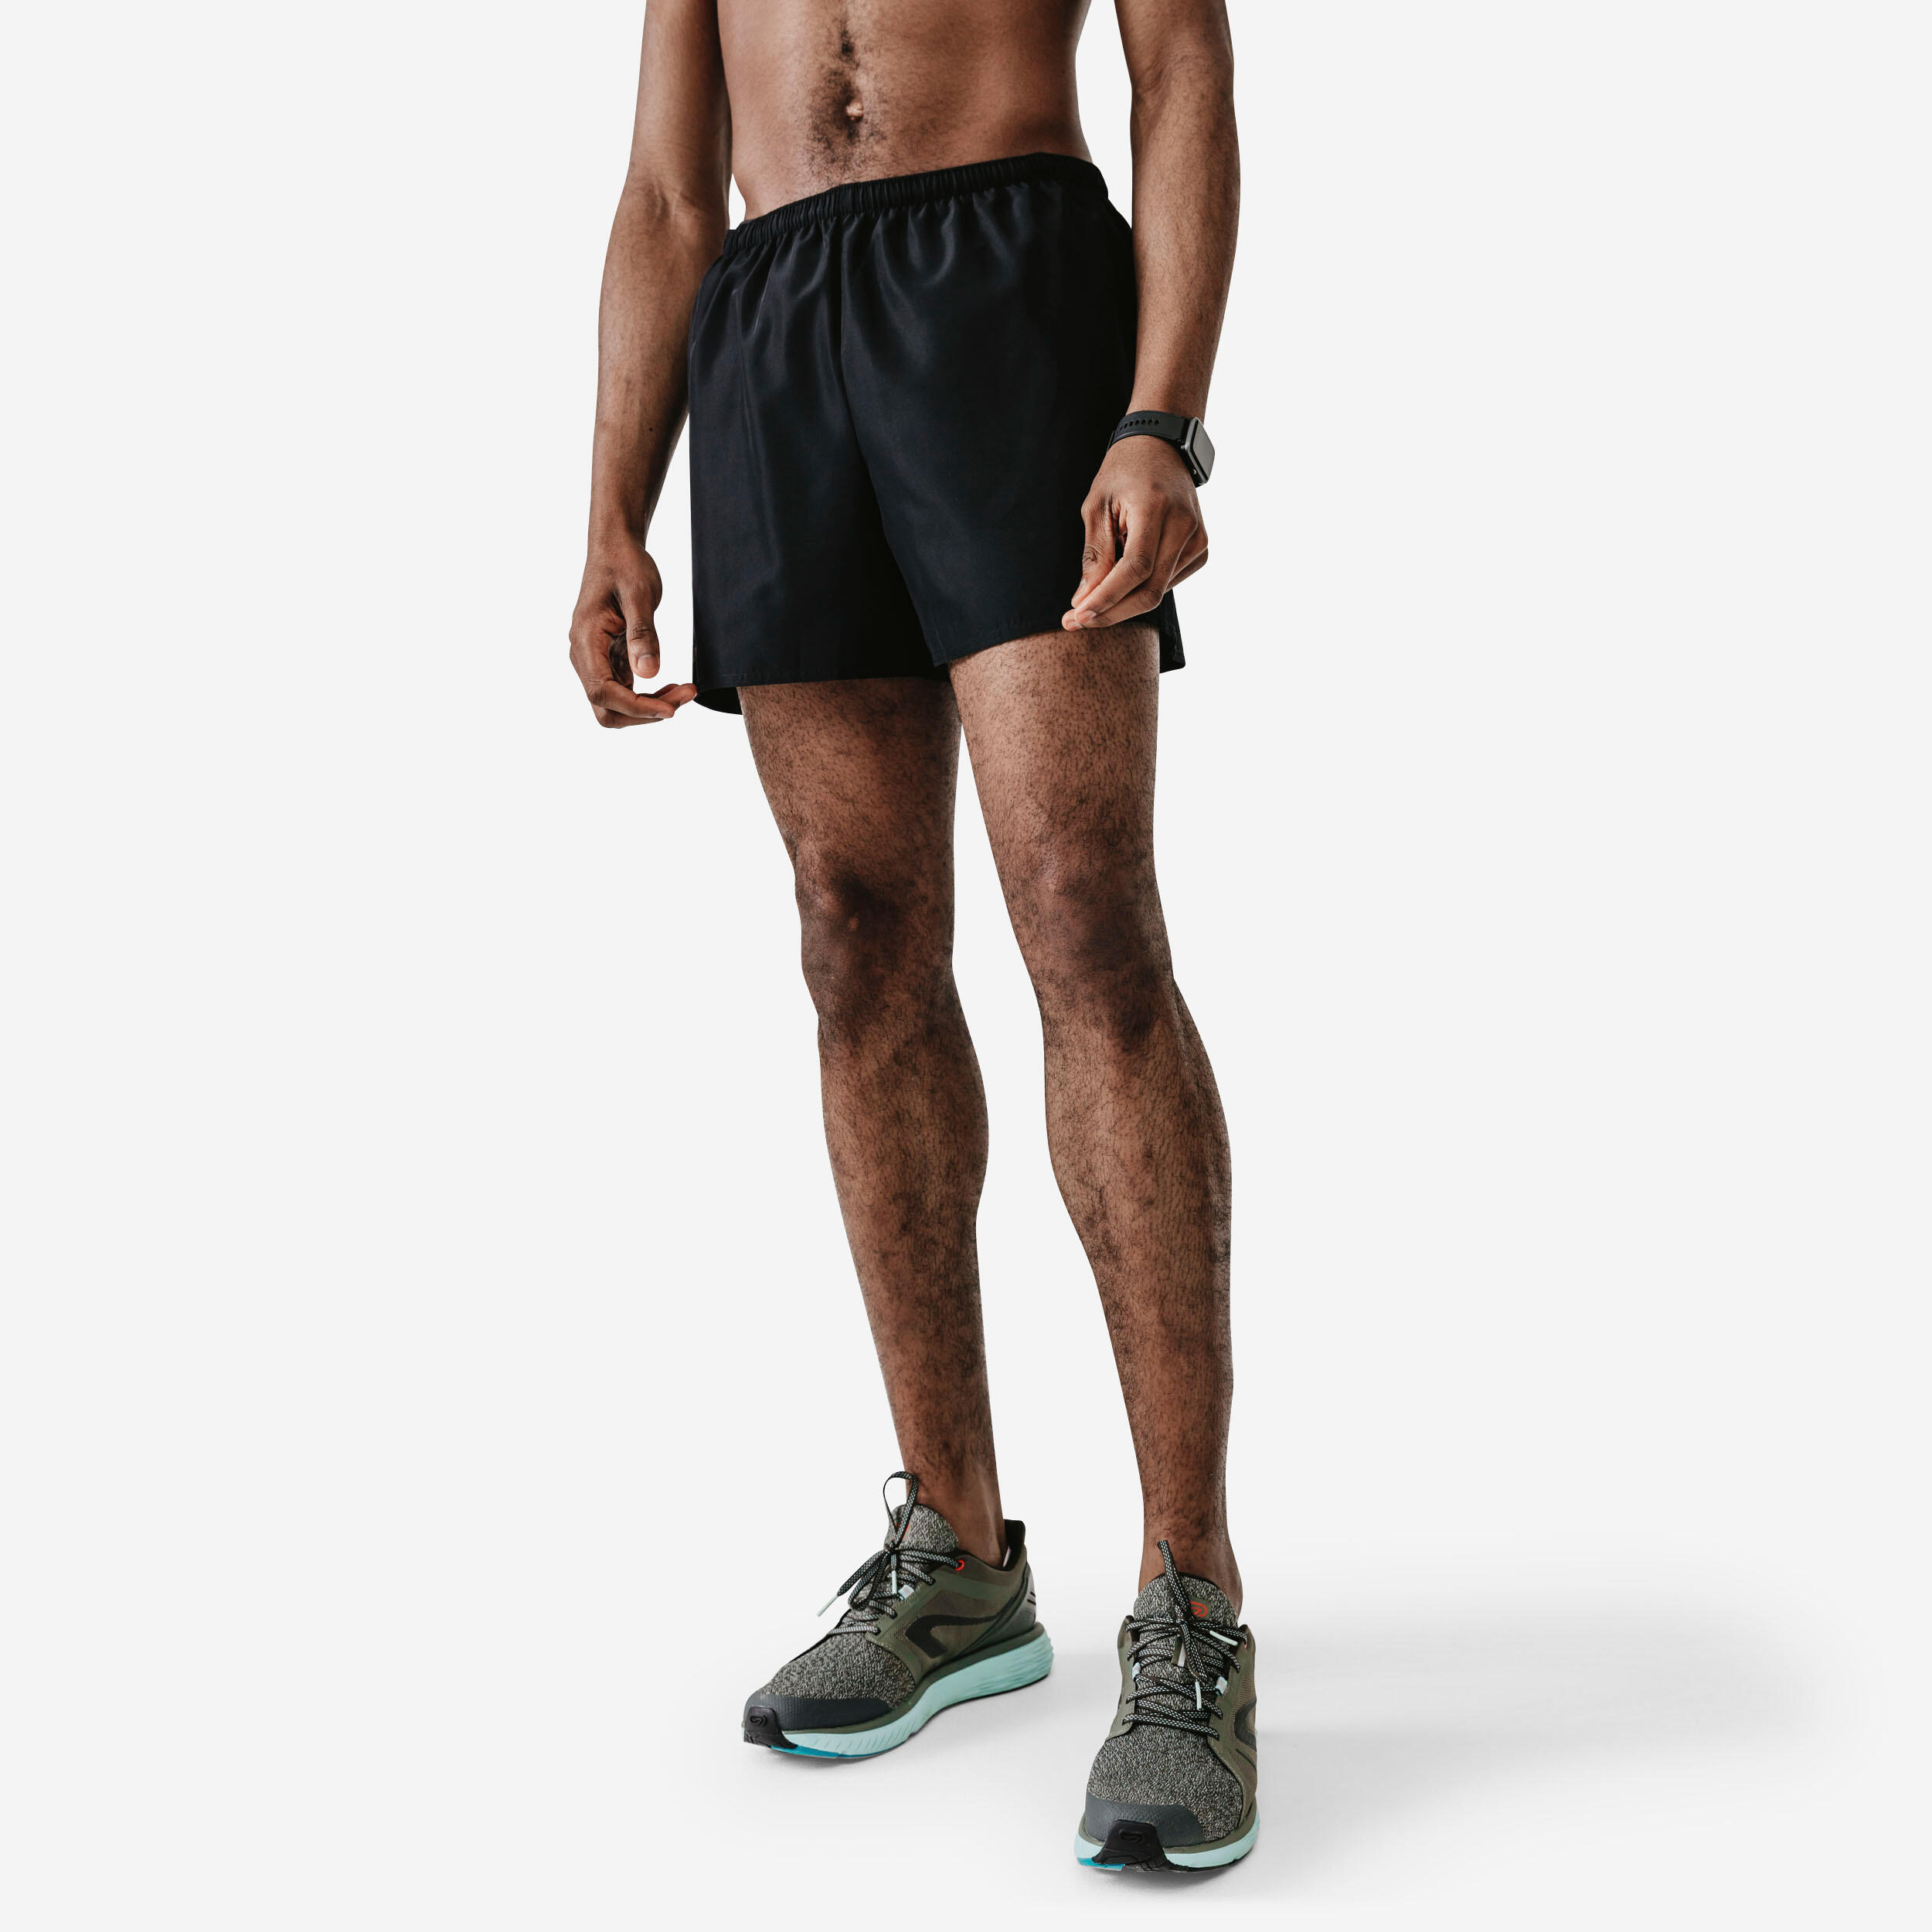 Decathlon Running Boxers Men (Quick Dry & Breathable) - Kalenji